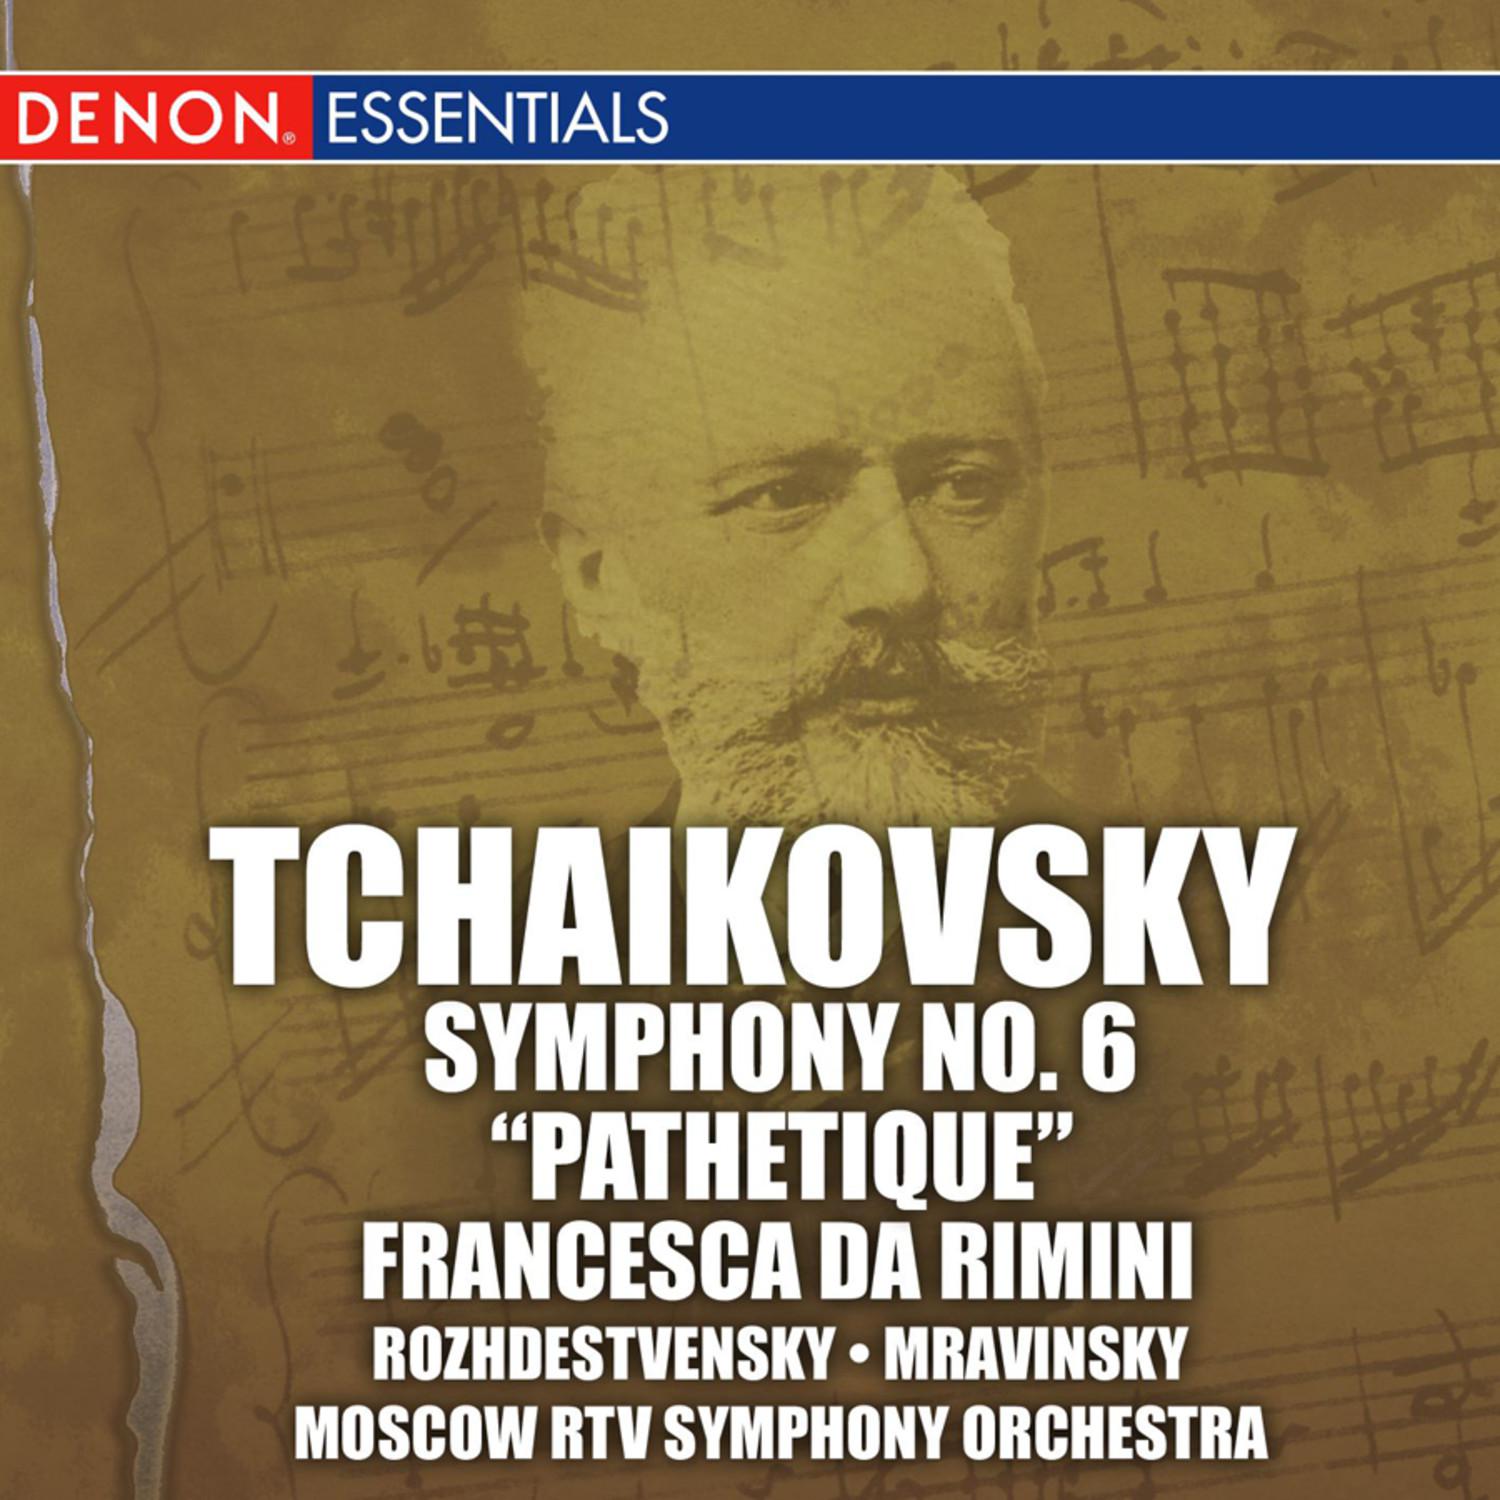 Tchaikovsky: Symphony No. 6 "Pathetique" & Francesca da Rimini